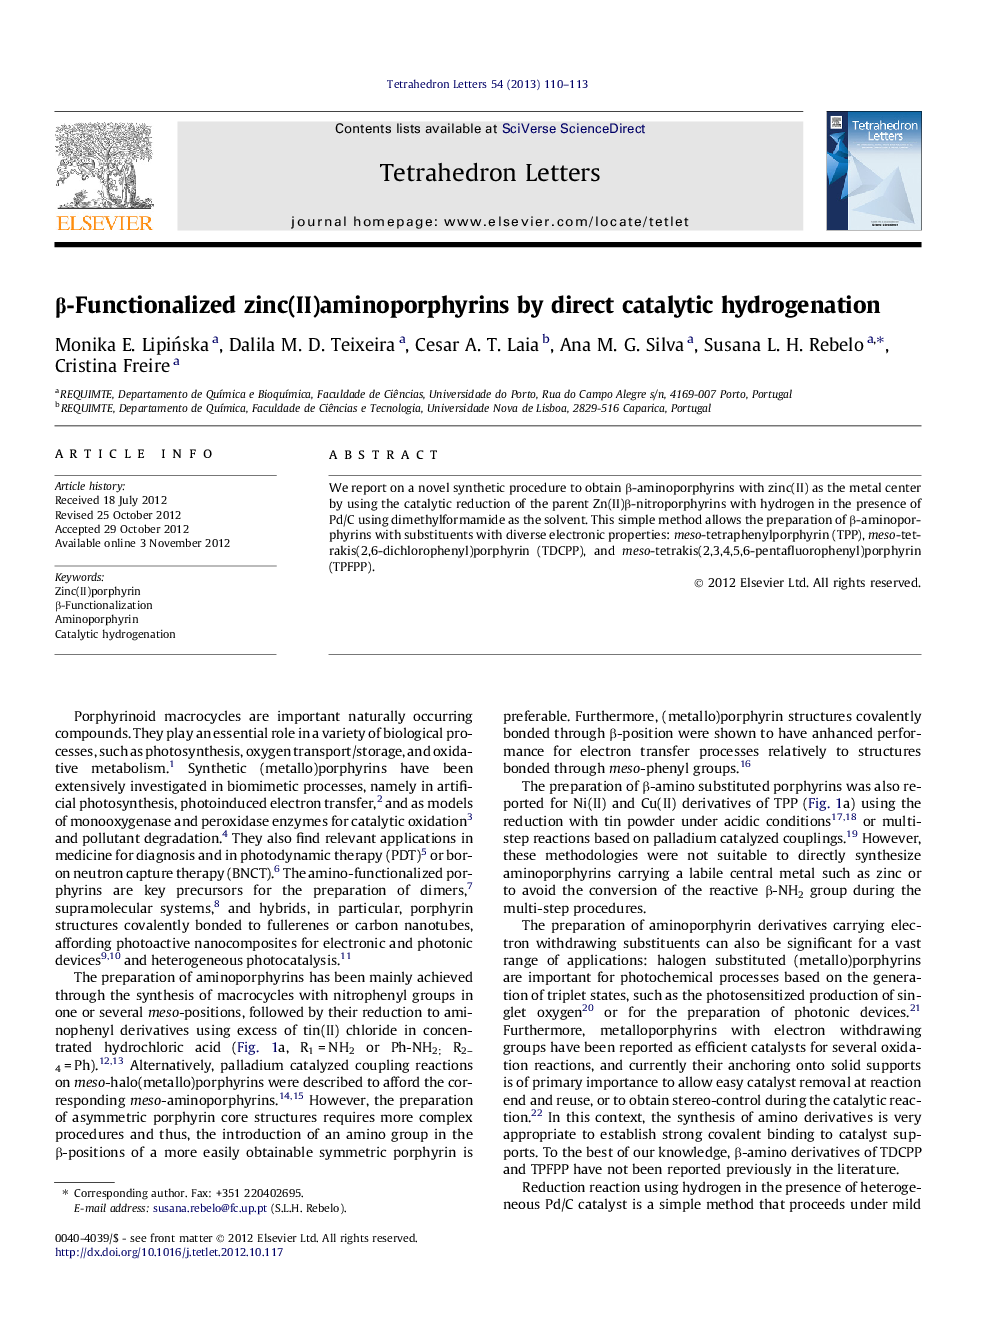 Î²-Functionalized zinc(II)aminoporphyrins by direct catalytic hydrogenation